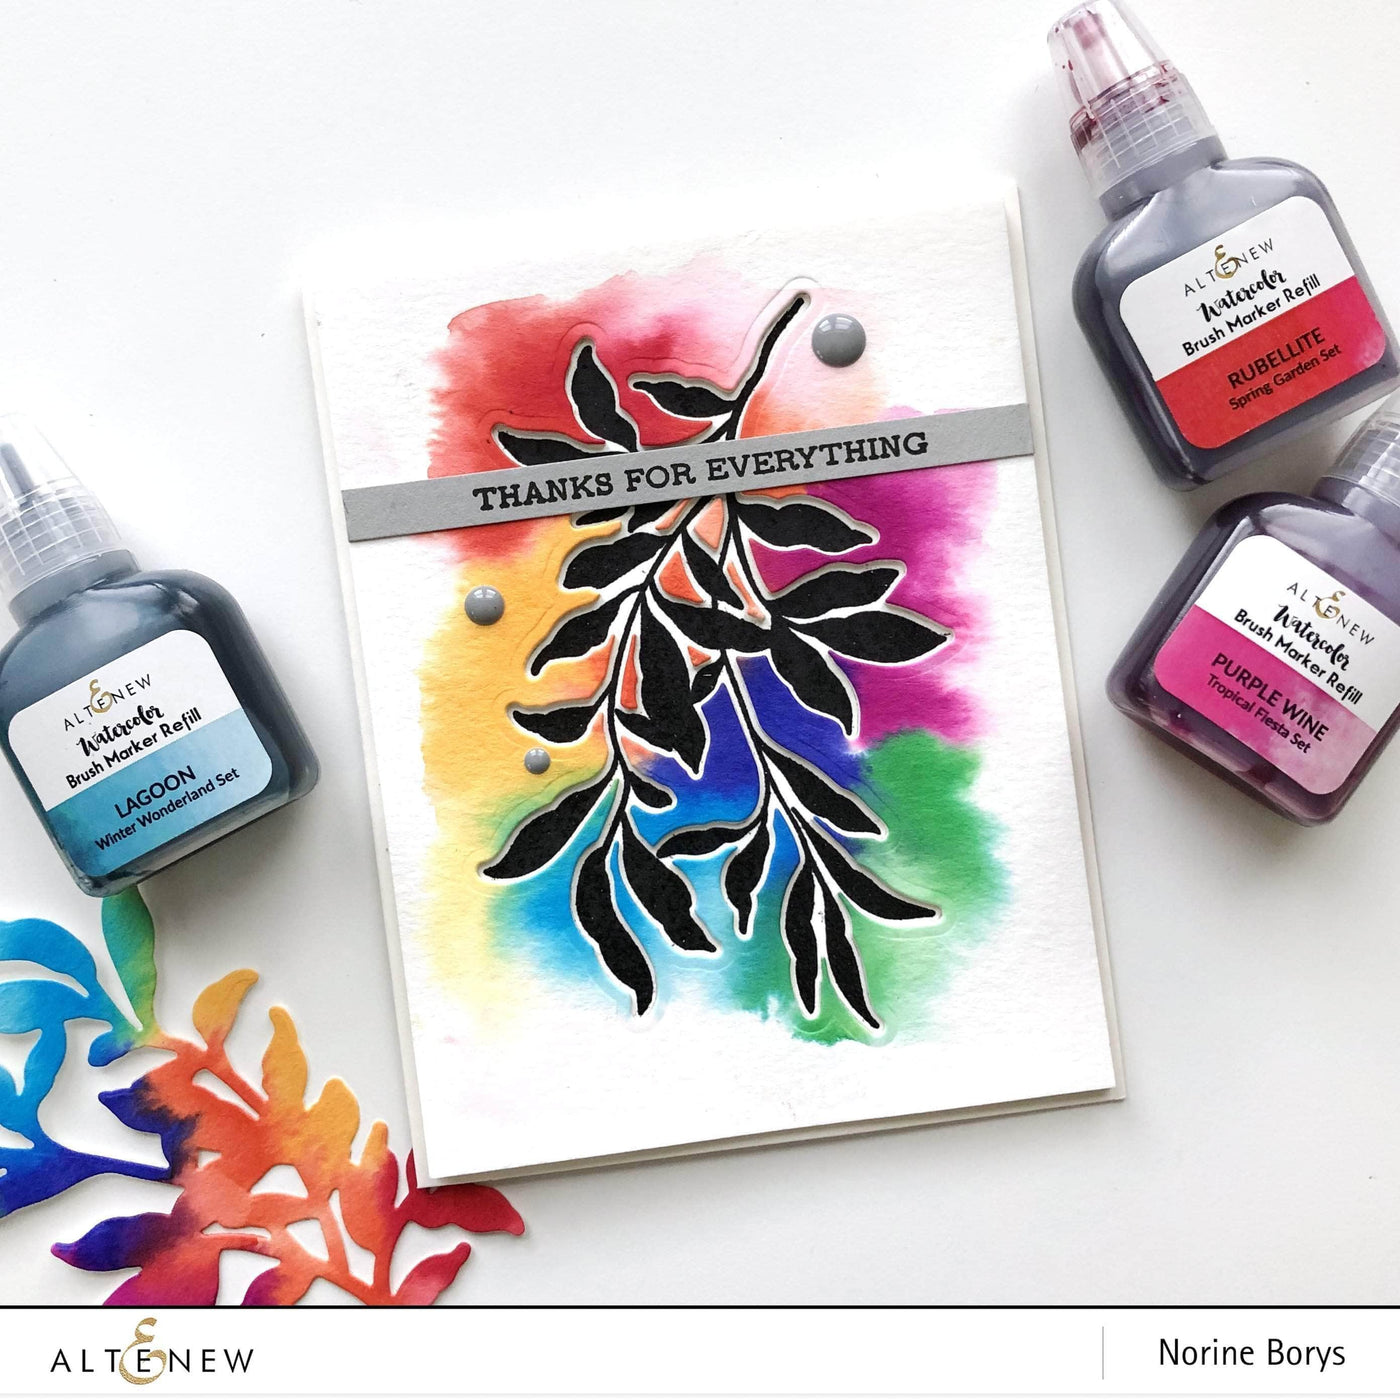 Be Creative Arts Crafts Liquid Watercolor Purple Wine Liquid Watercolor - Brush Marker Refill